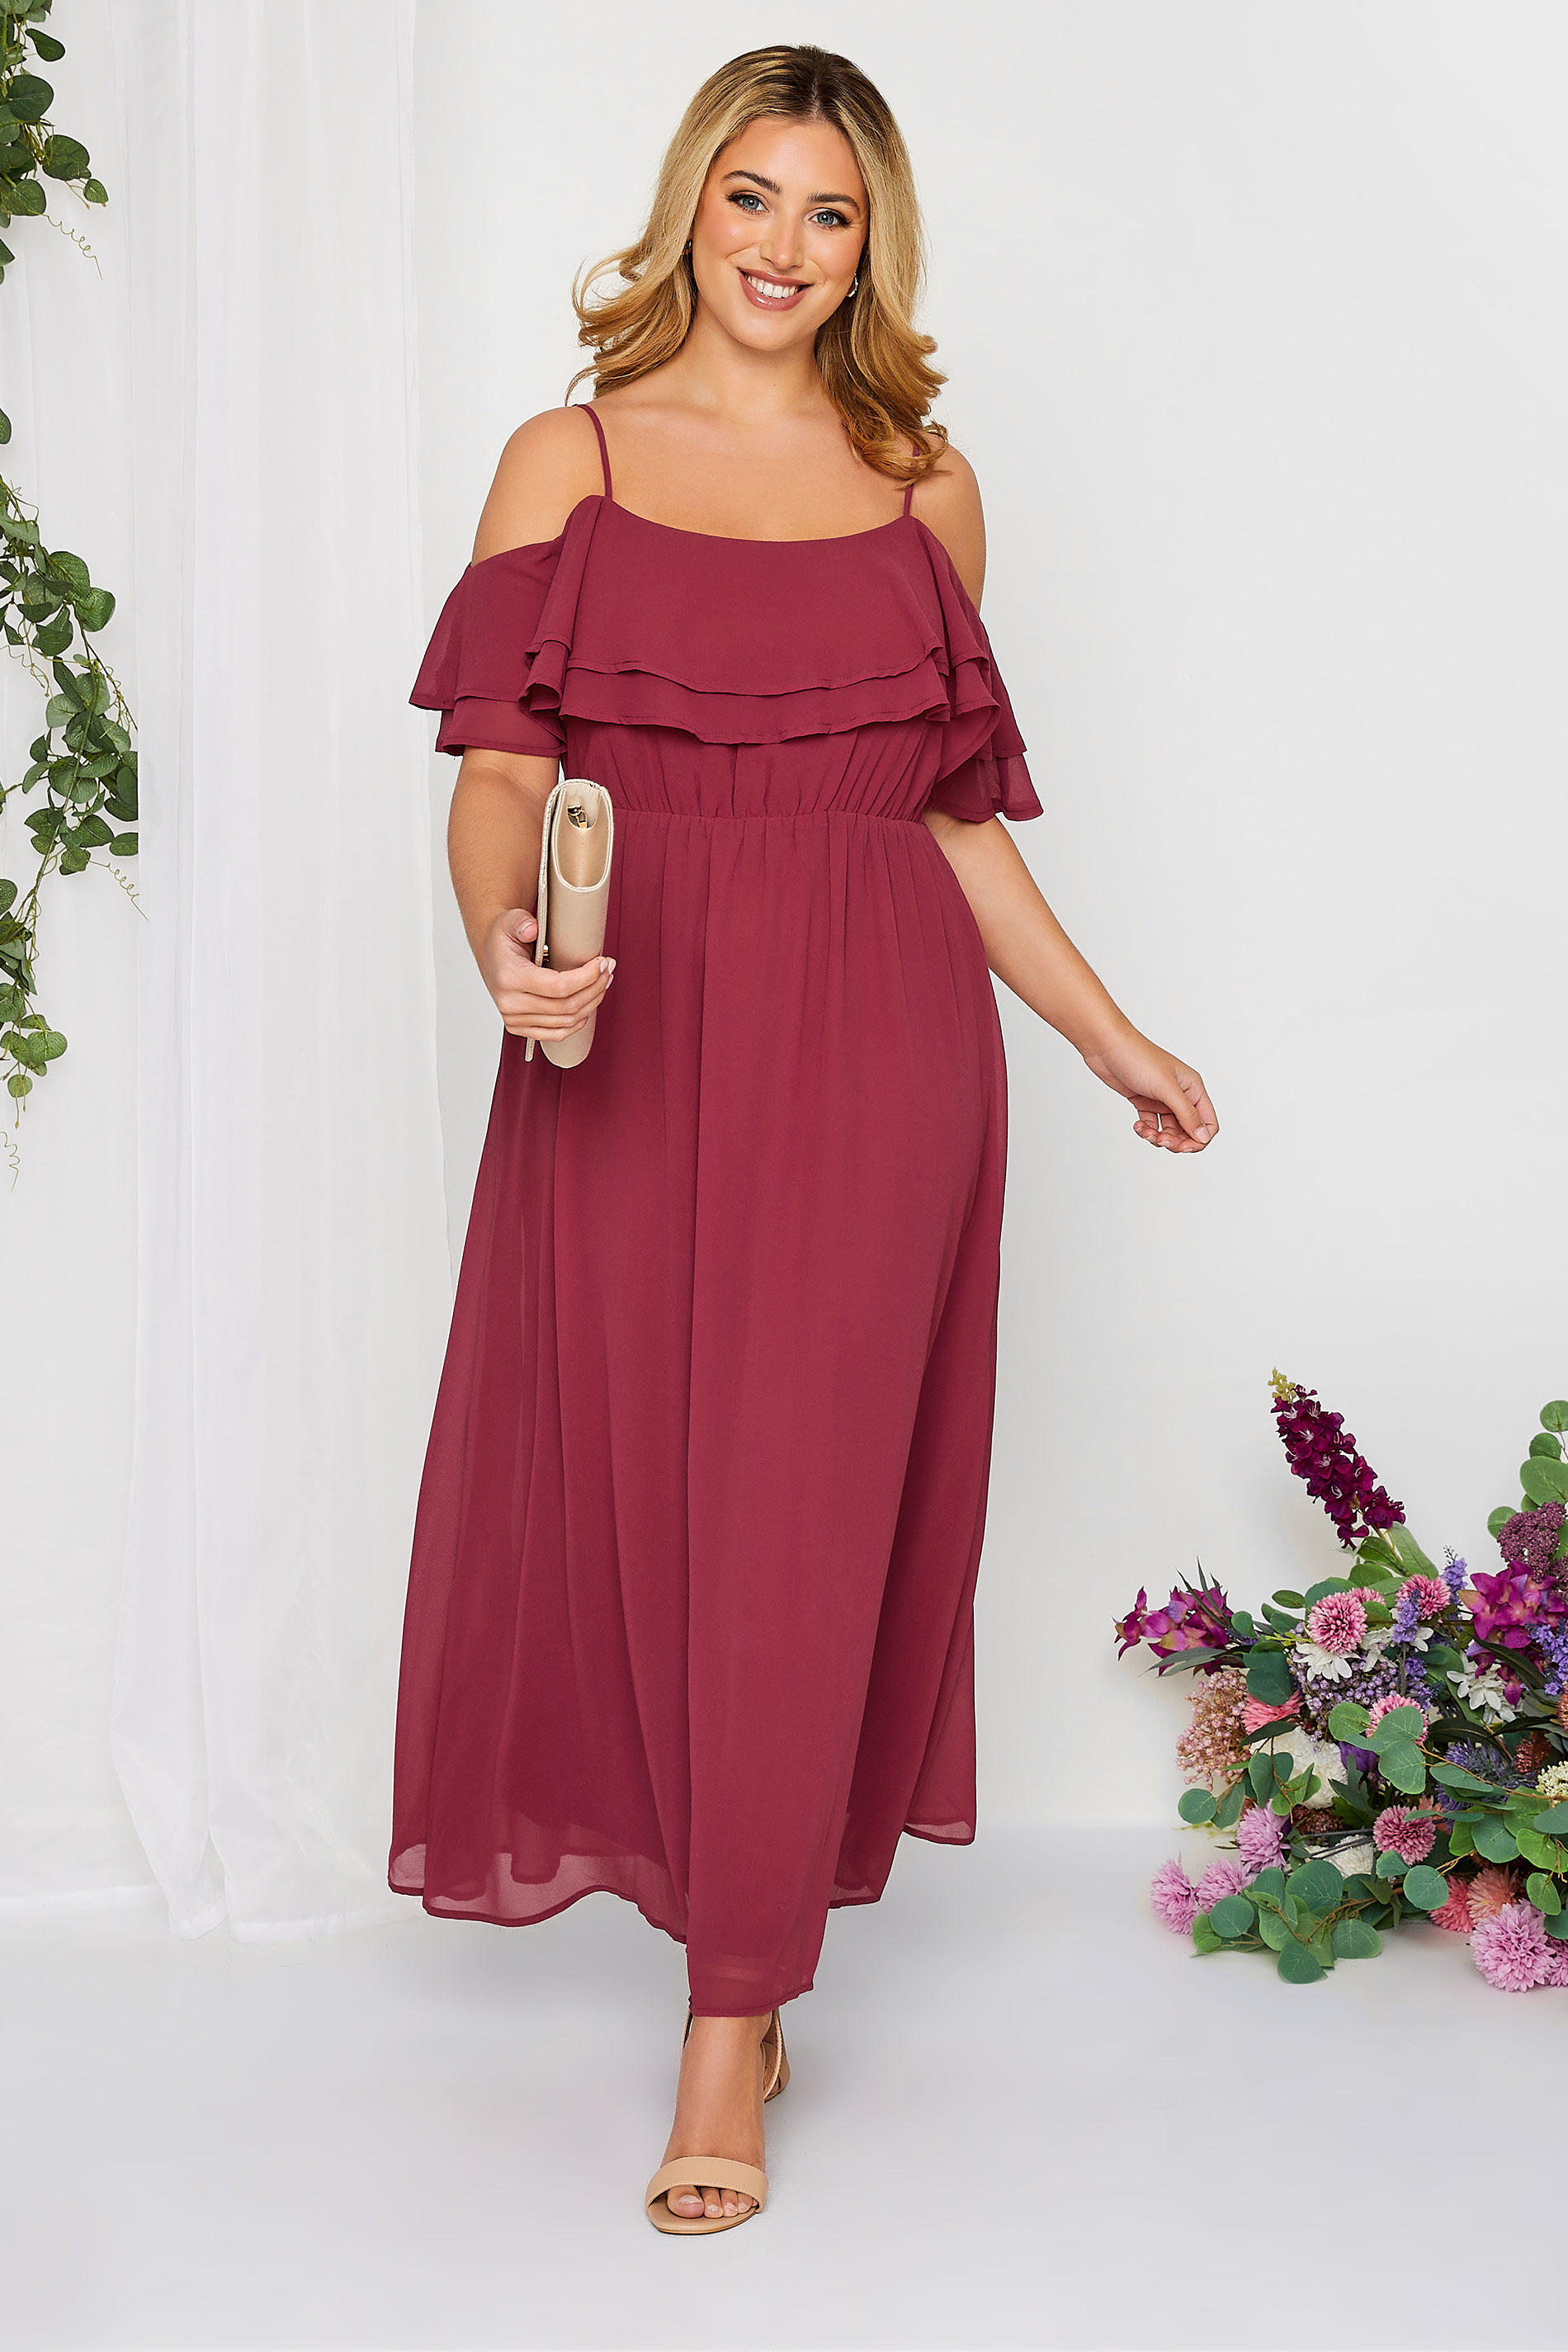 YOURS LONDON Plus Size Burgundy Red Bardot Ruffle Maxi Dress | Yours Clothing 1